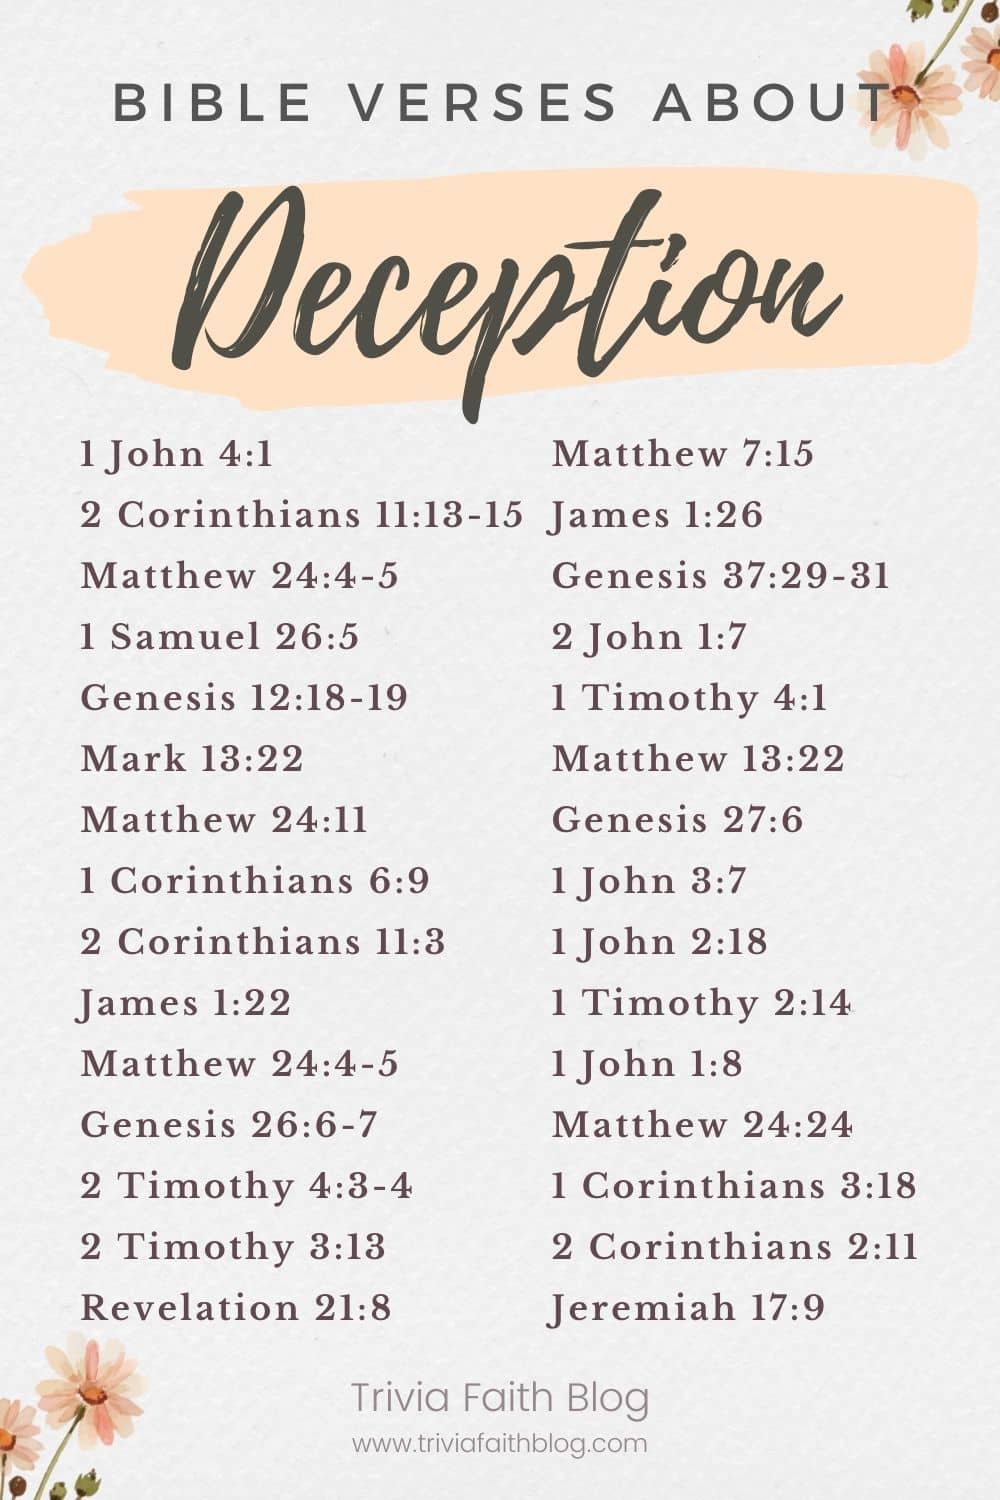 Bible verses about deception